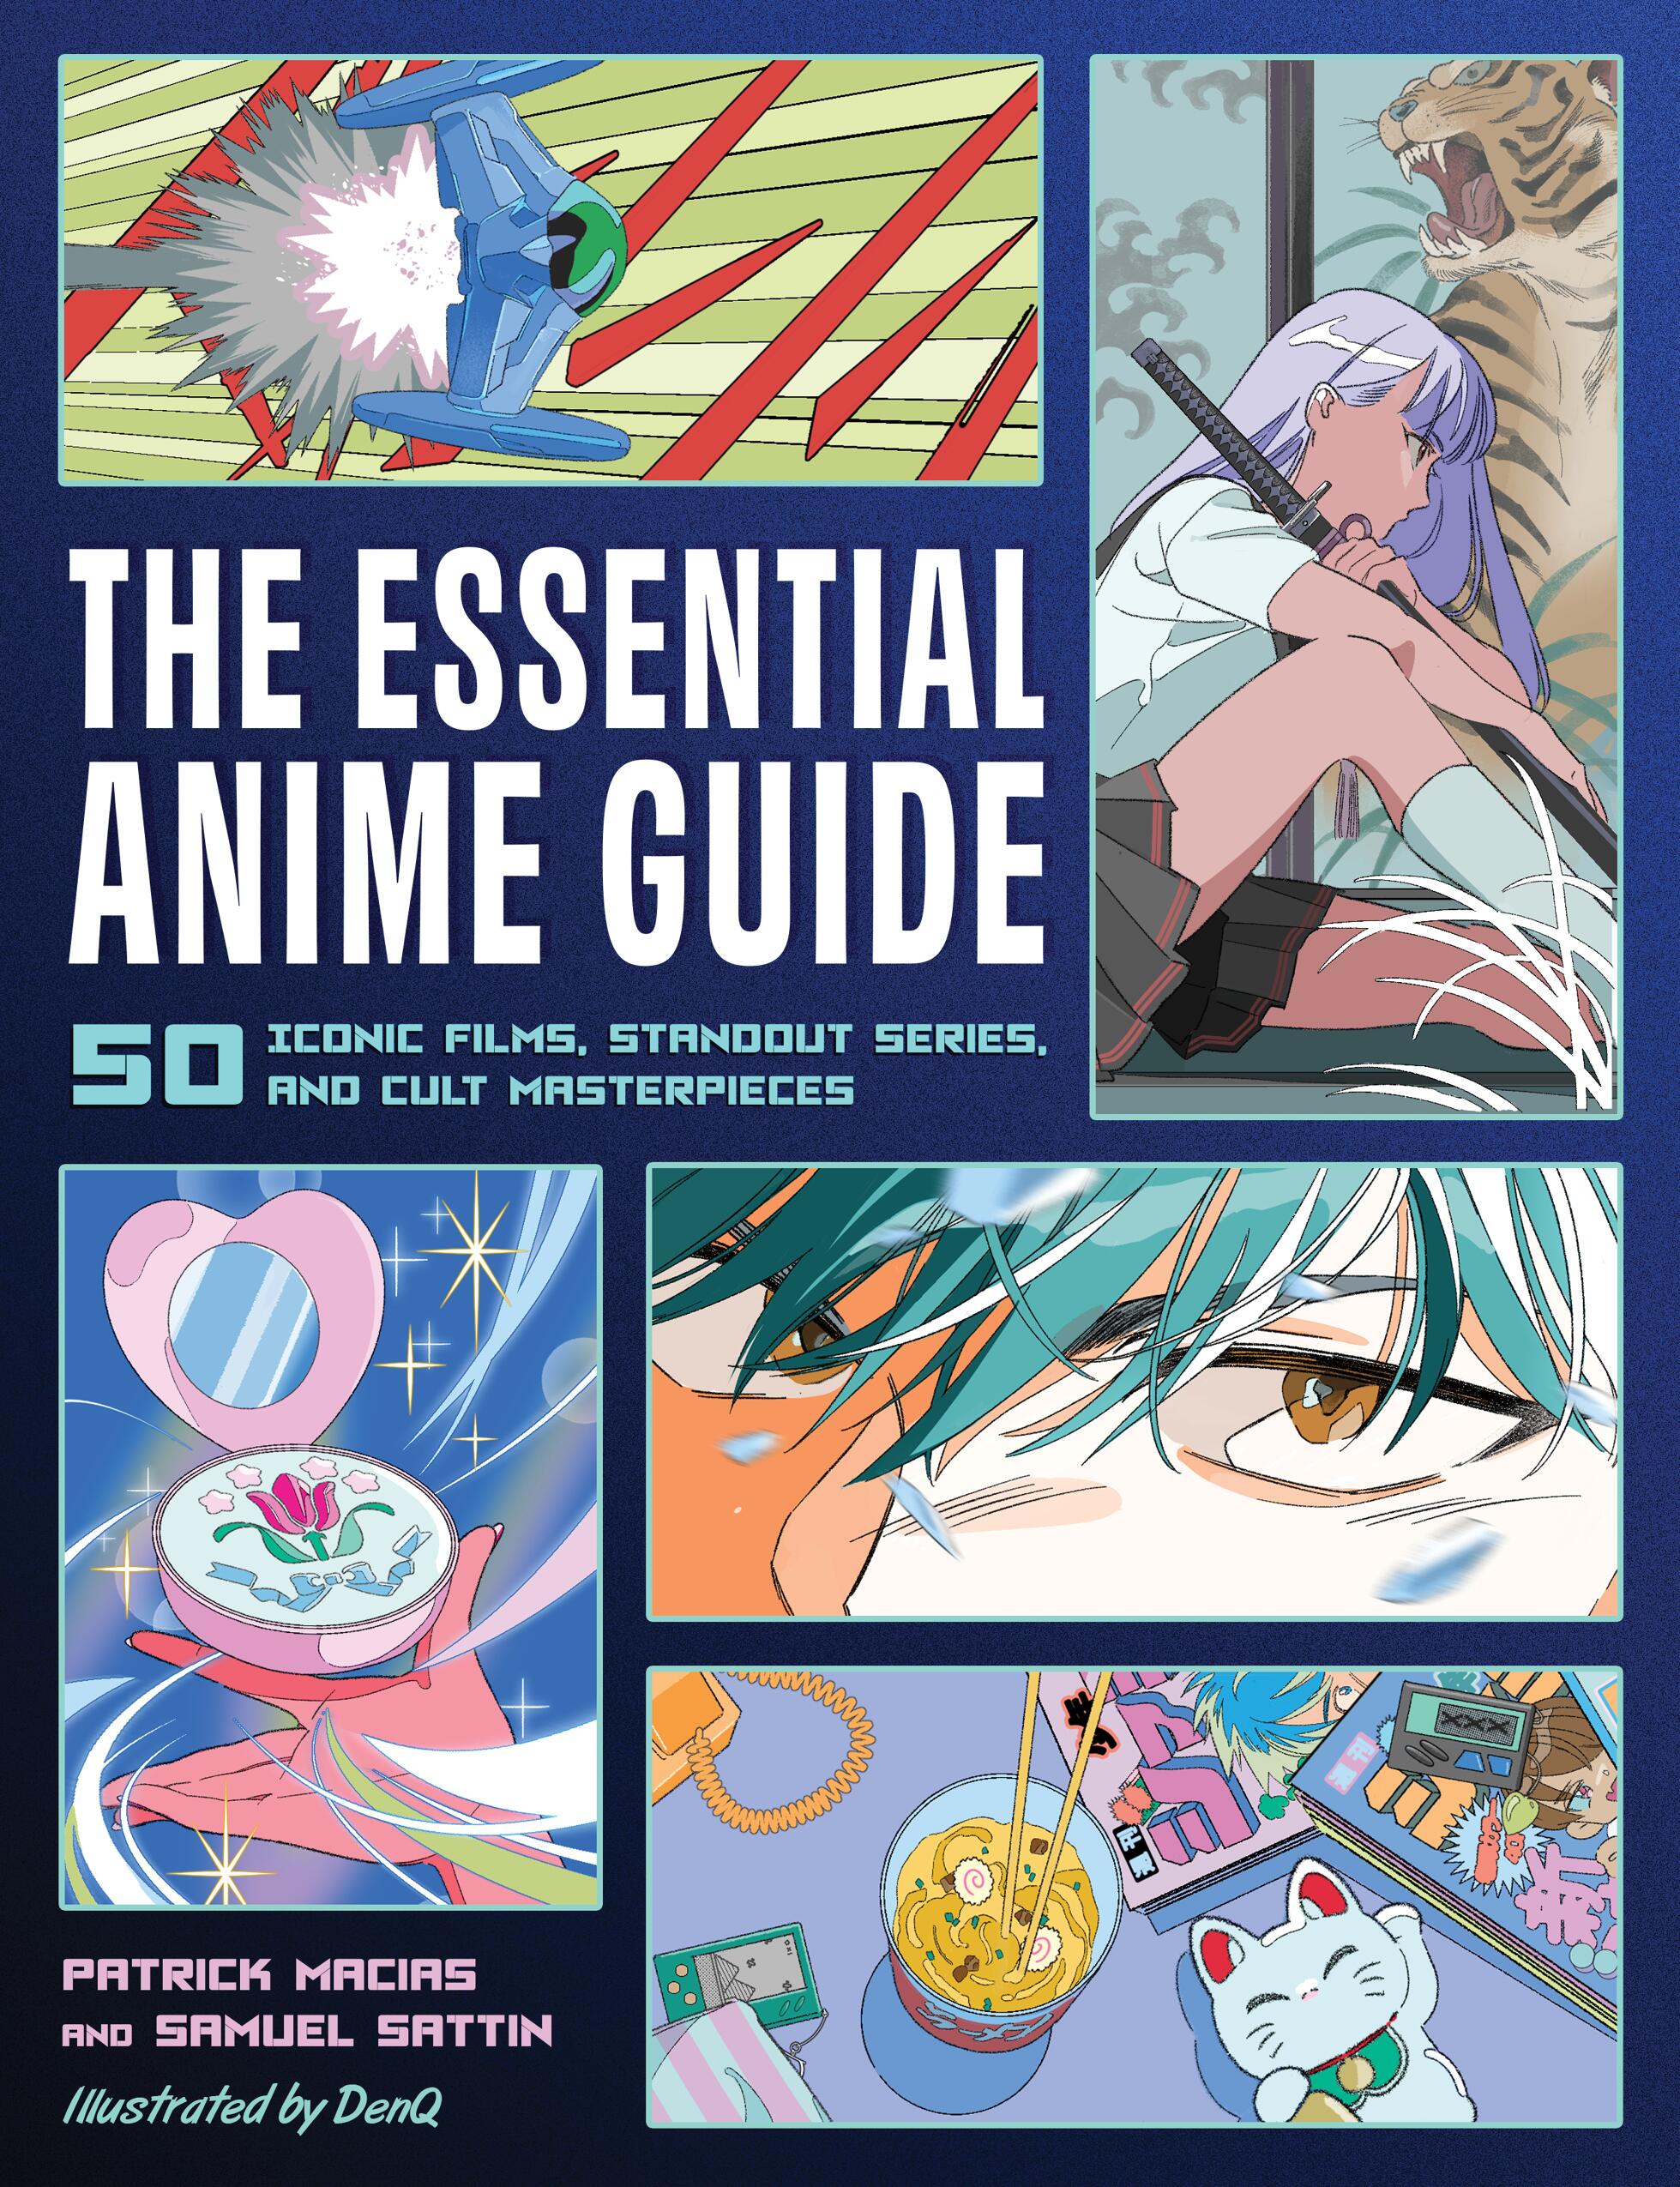 The Ultimate Guide to Manga & Anime Magazine (Digital)